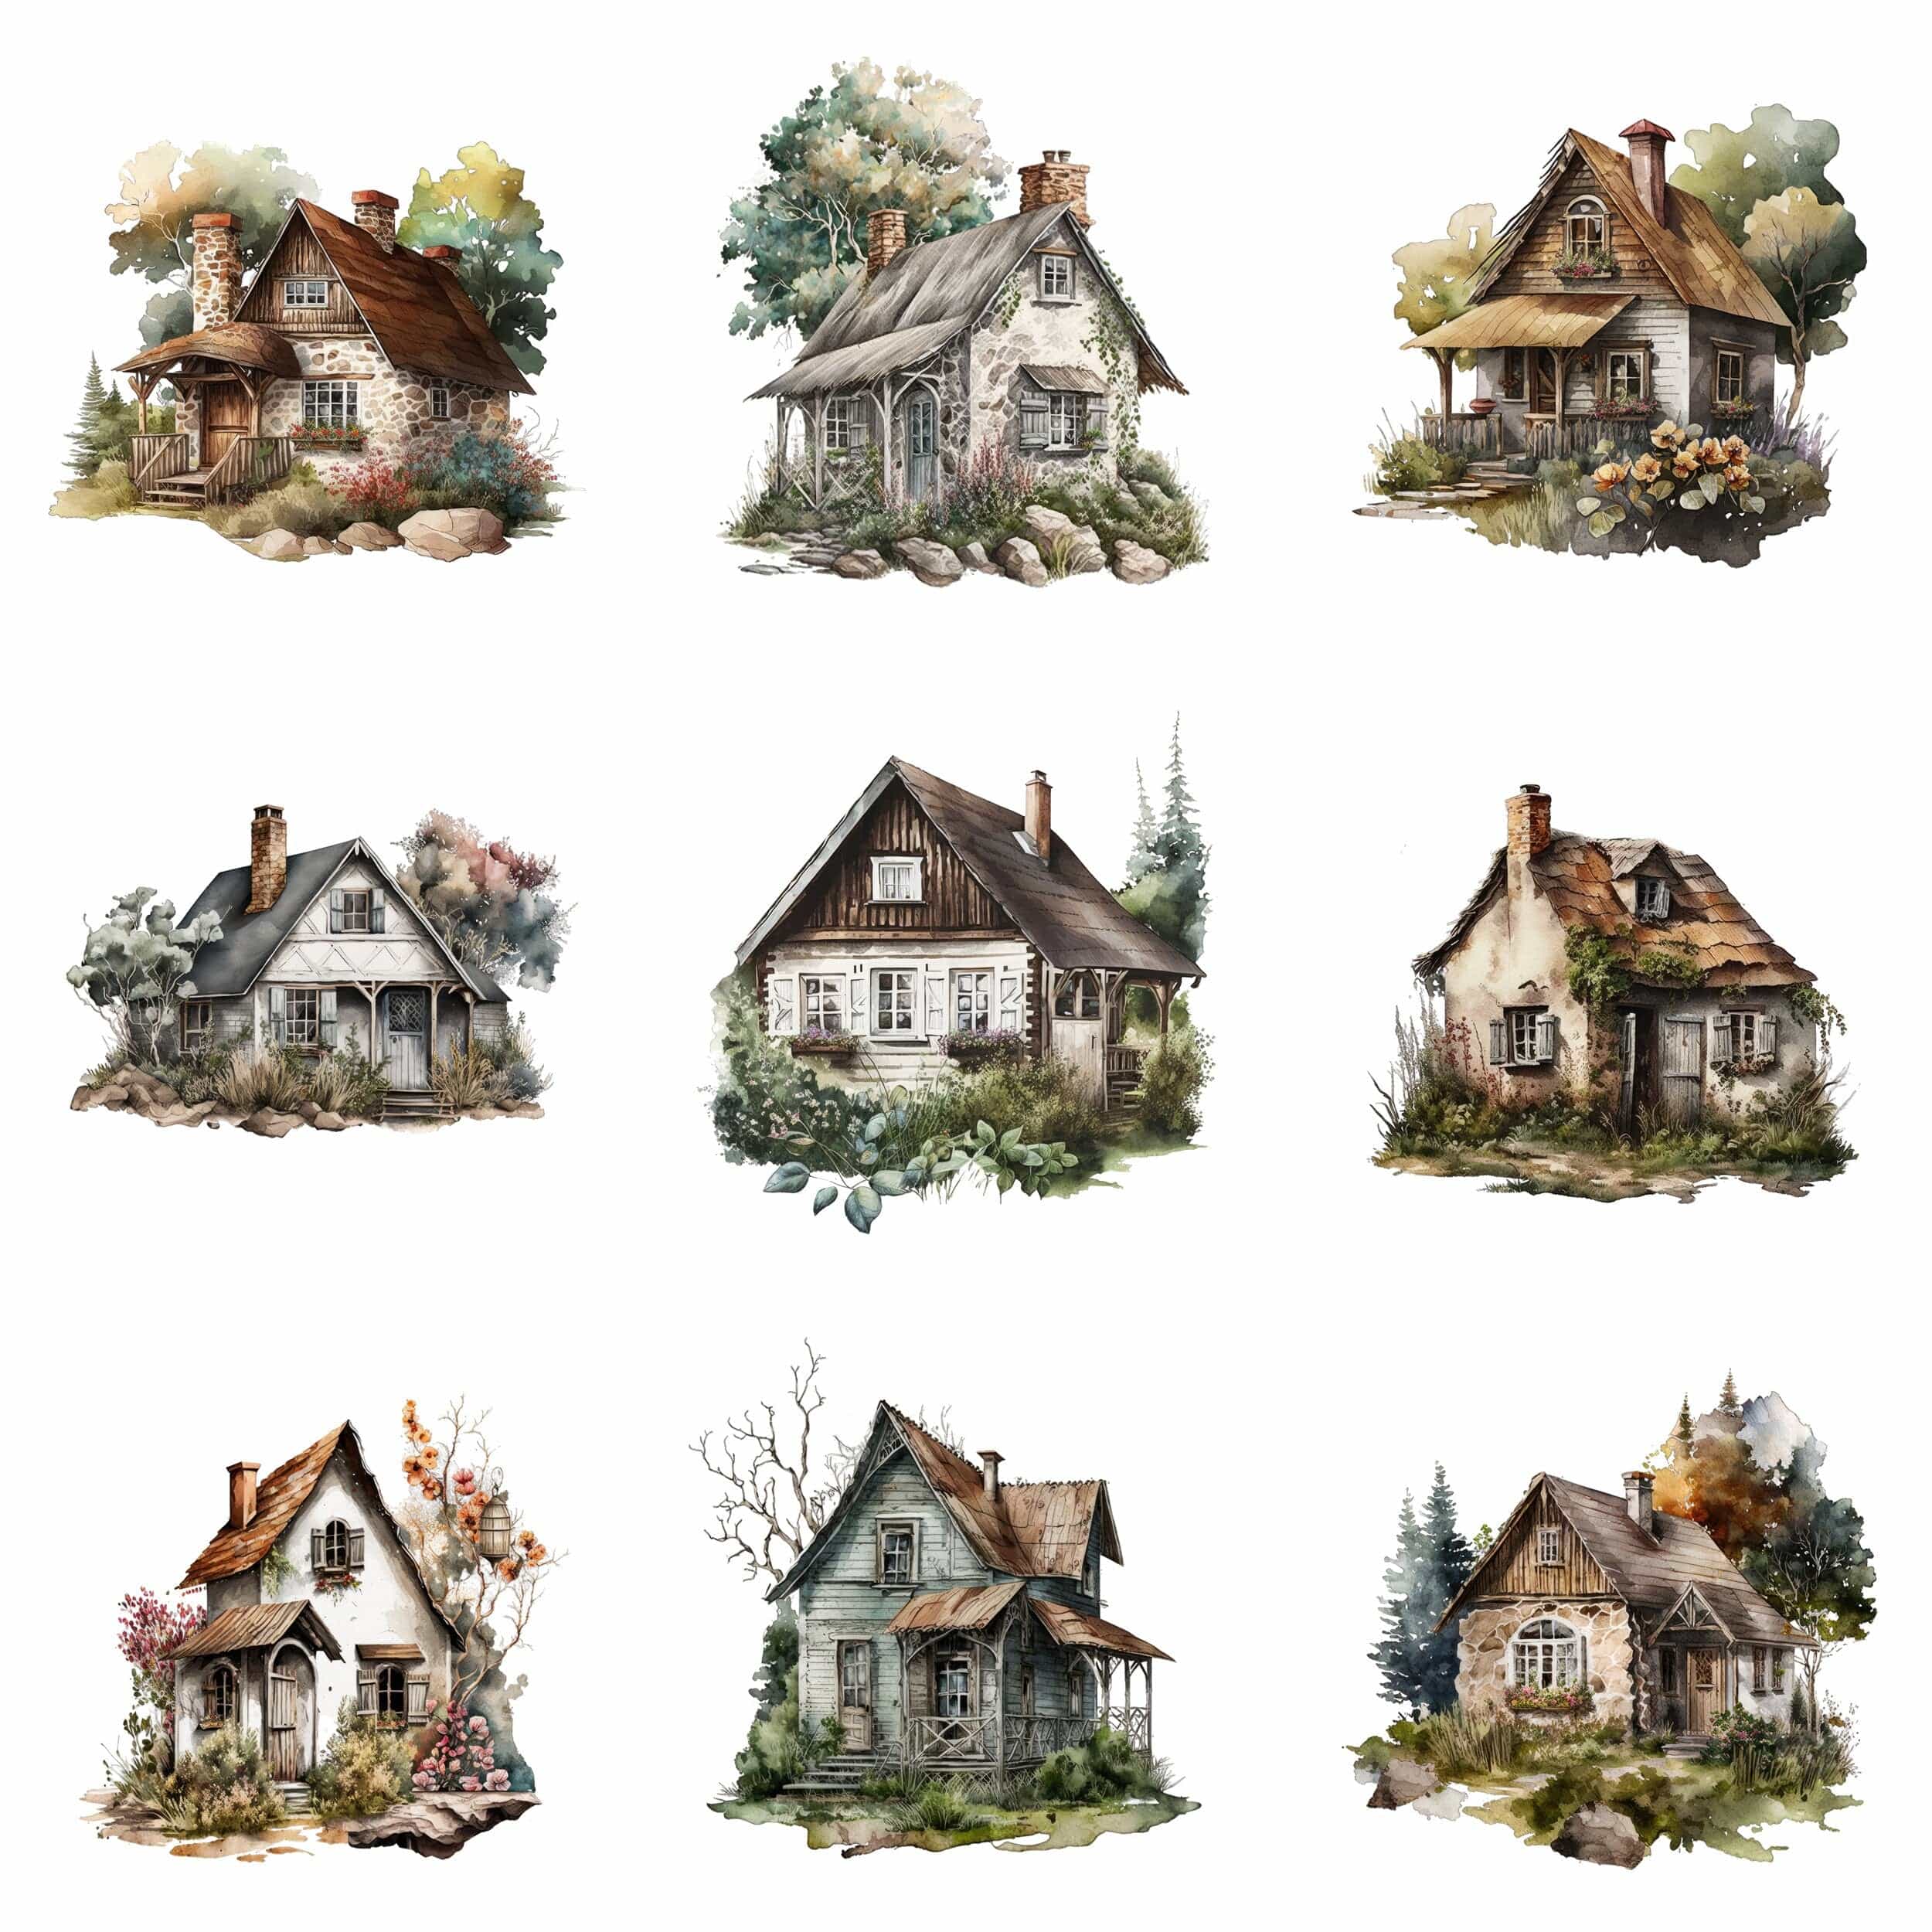 Rustic House & Cottage Bundle - 59 High-Quality Images, Vintage Homes, Cozy Cabins, Country Living, Digital Download, Printable Wall Art Digital Download Sumobundle